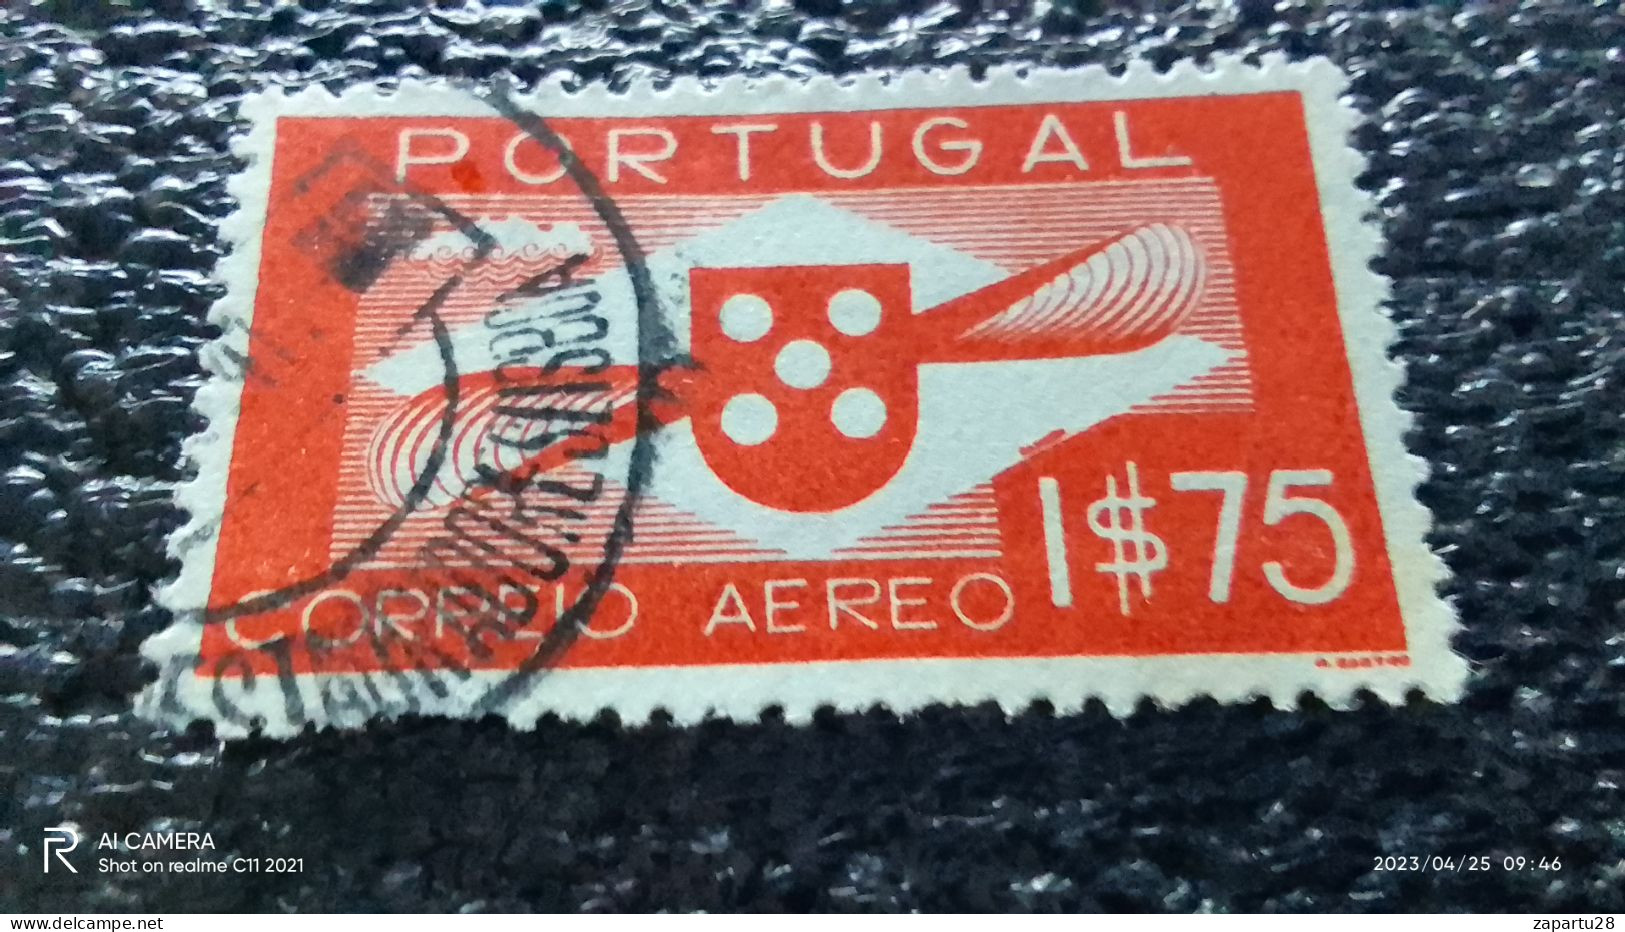 PORTUGAL-1944-       .          1.50ESC         USED - Usado